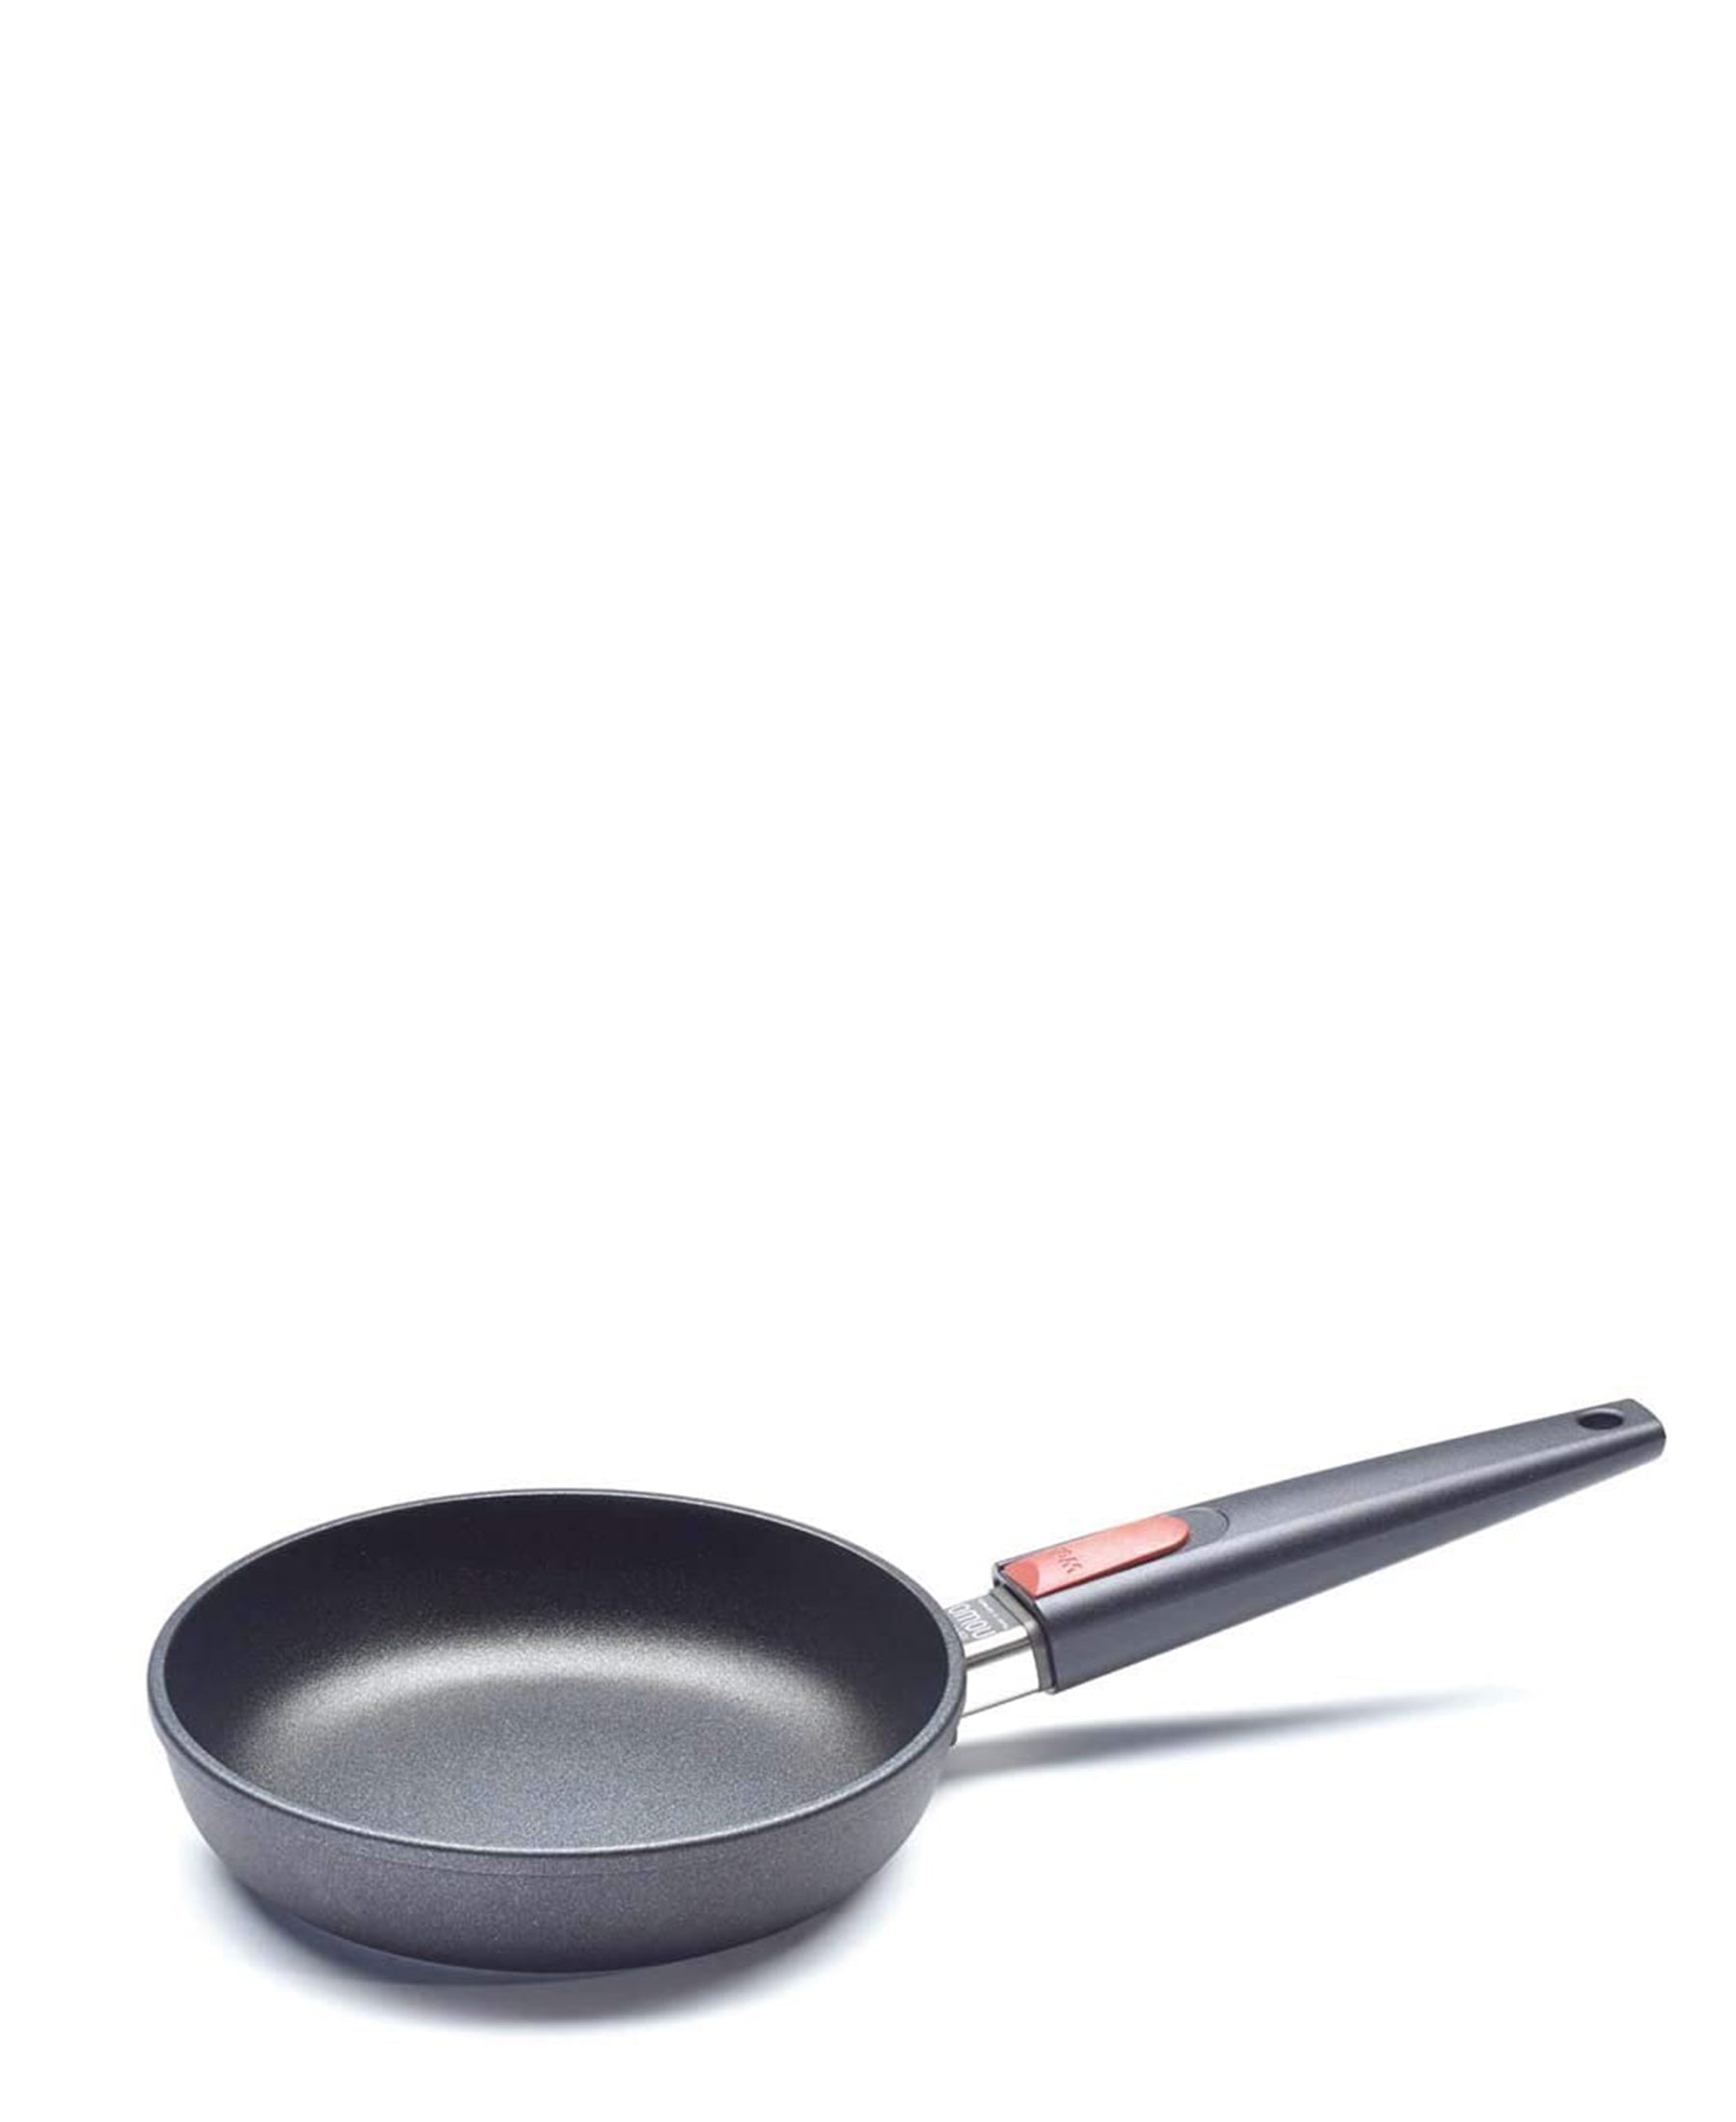 Woll Titanium Nowo Fry Pan Induction 24cm - Black